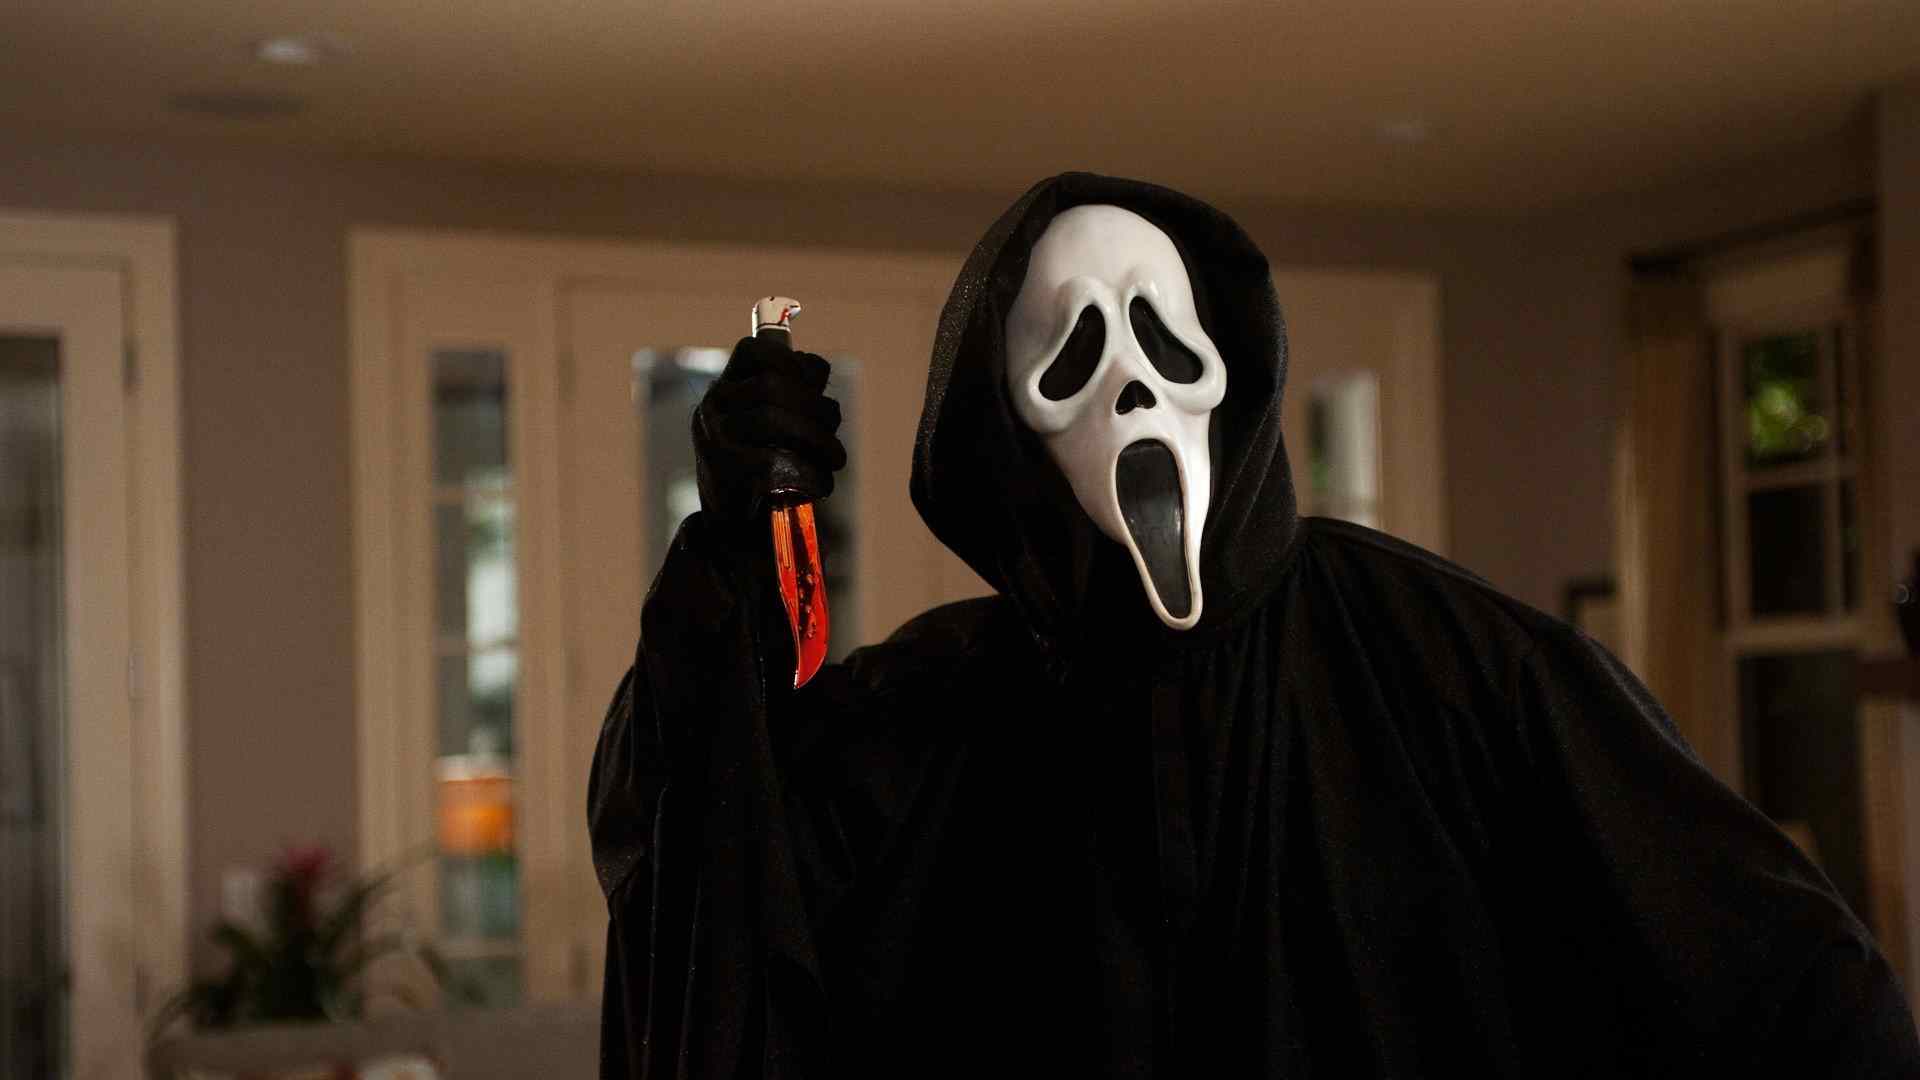 The ghostface killer in the popular scream movie franchise.